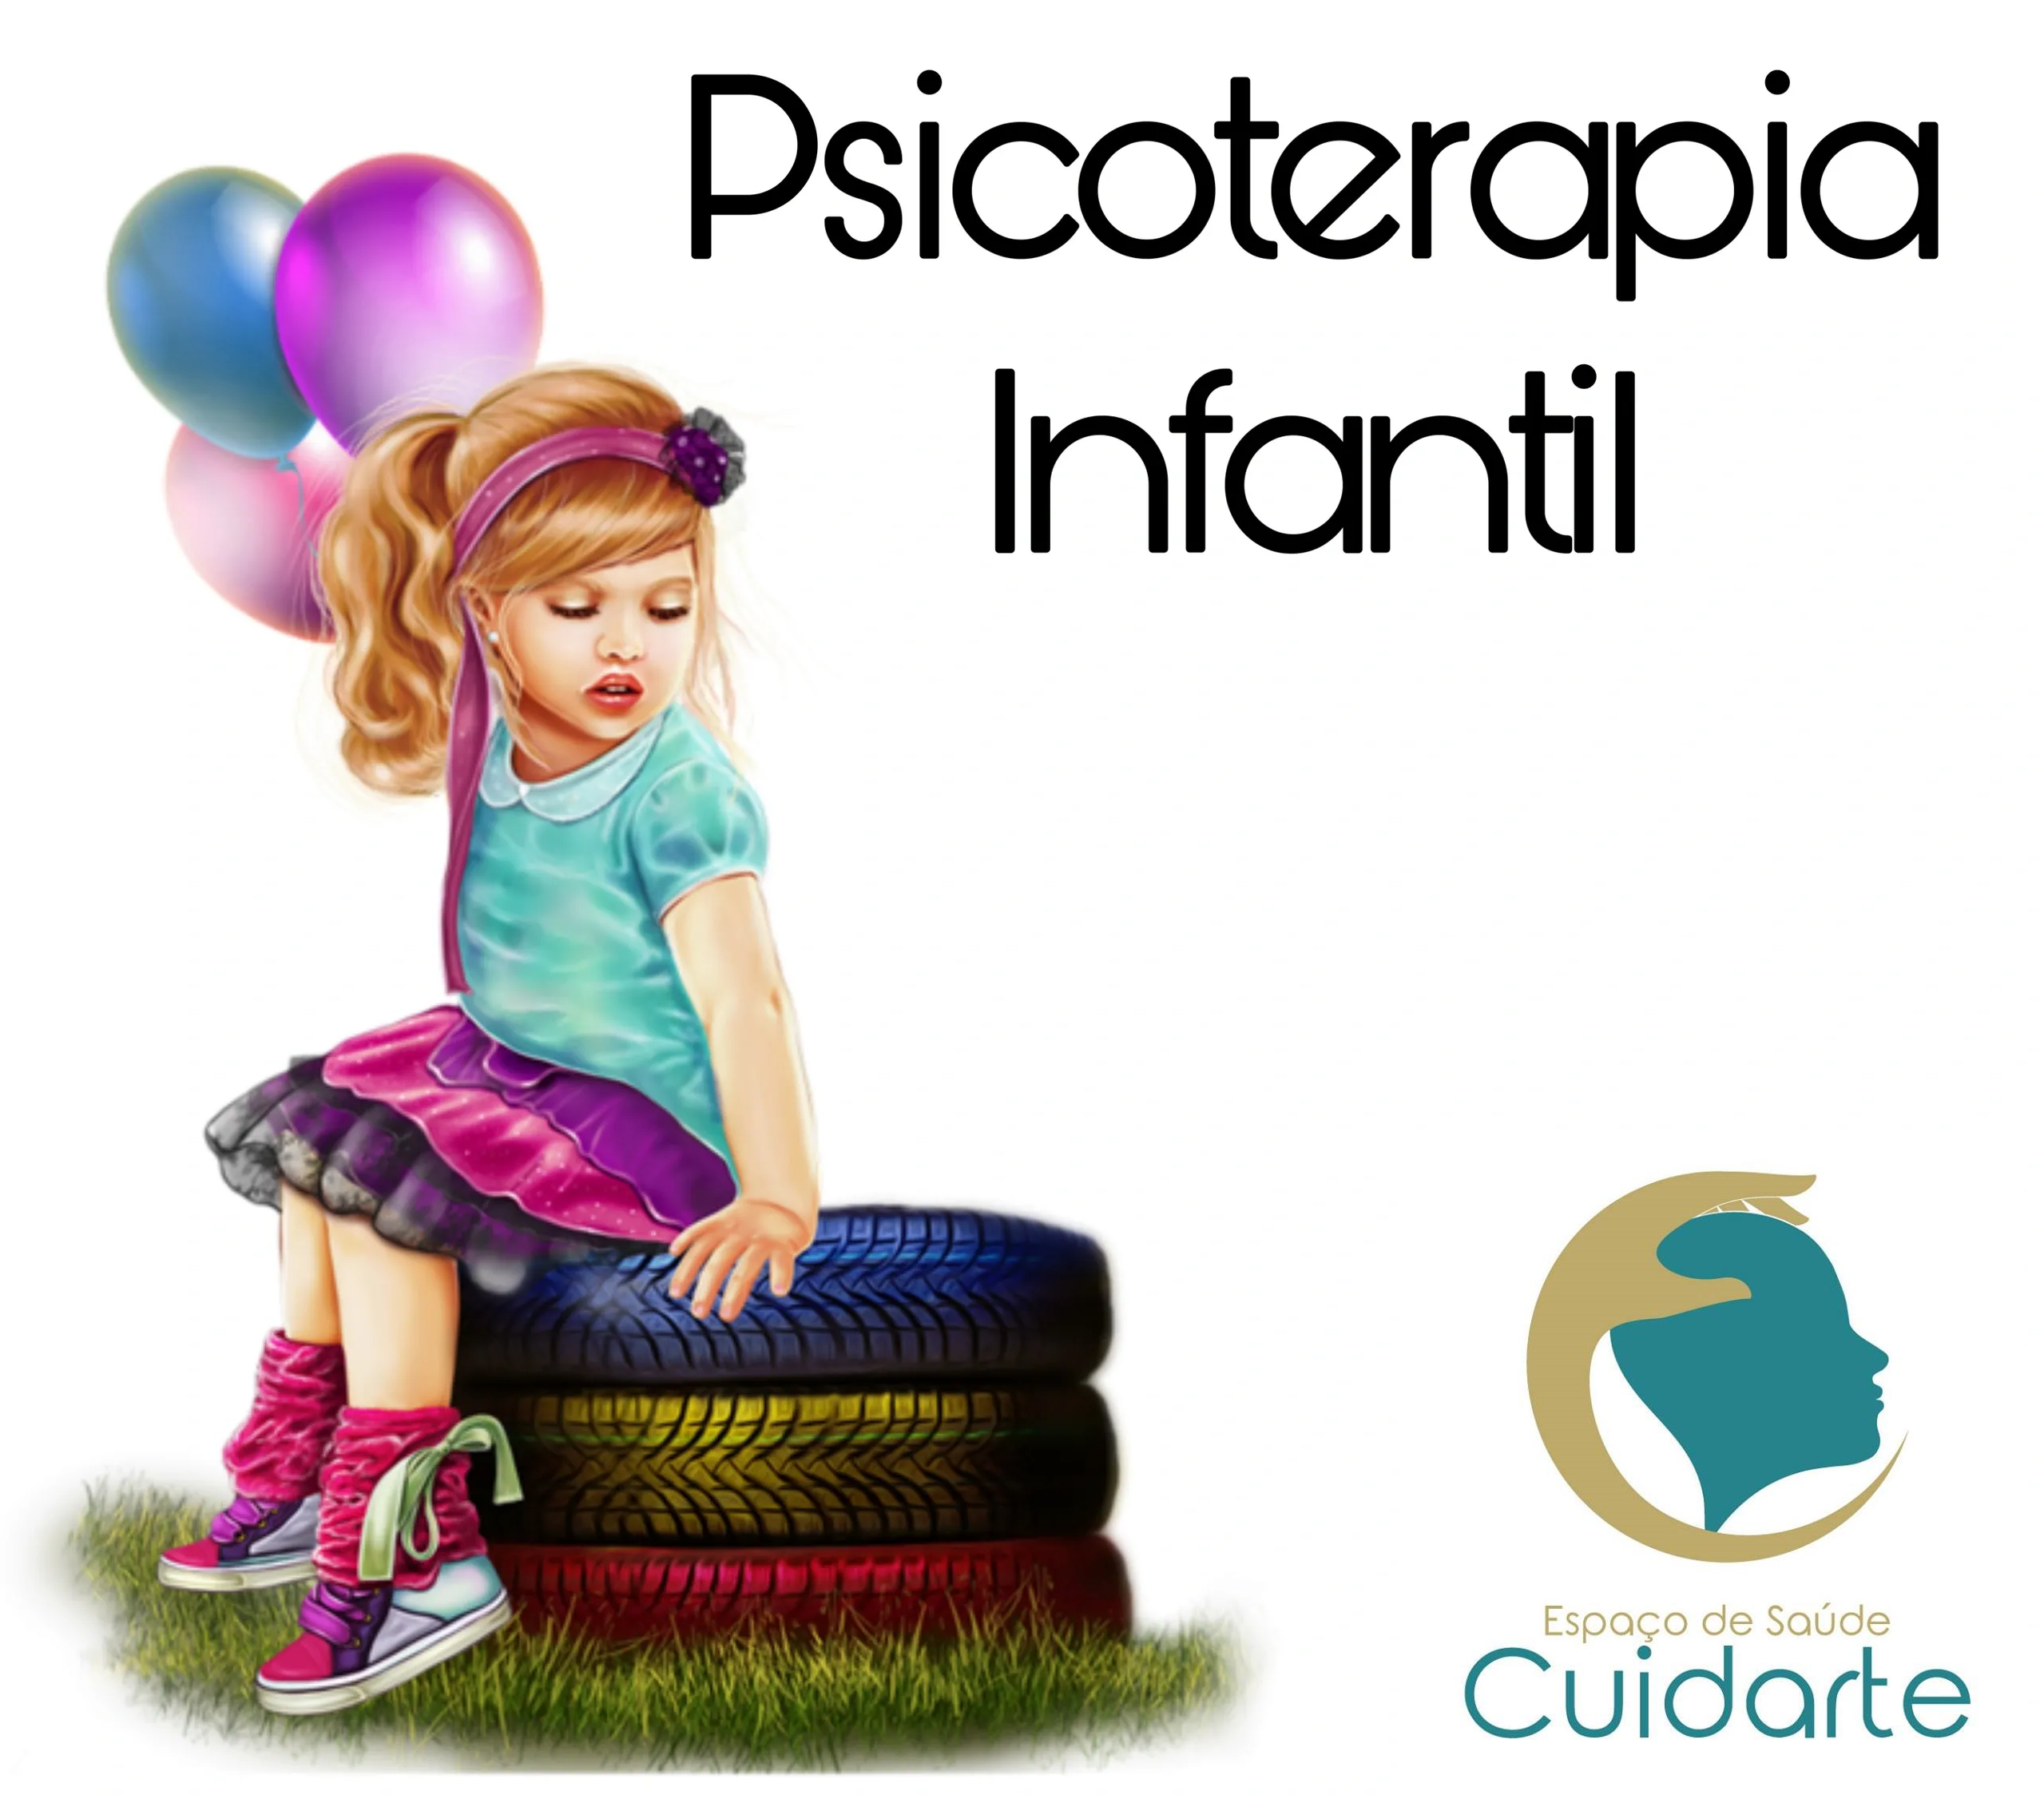 PSICOTERAPIA INFANTIL OU LUDOTERAPIA - Instituto Inclusão Brasil